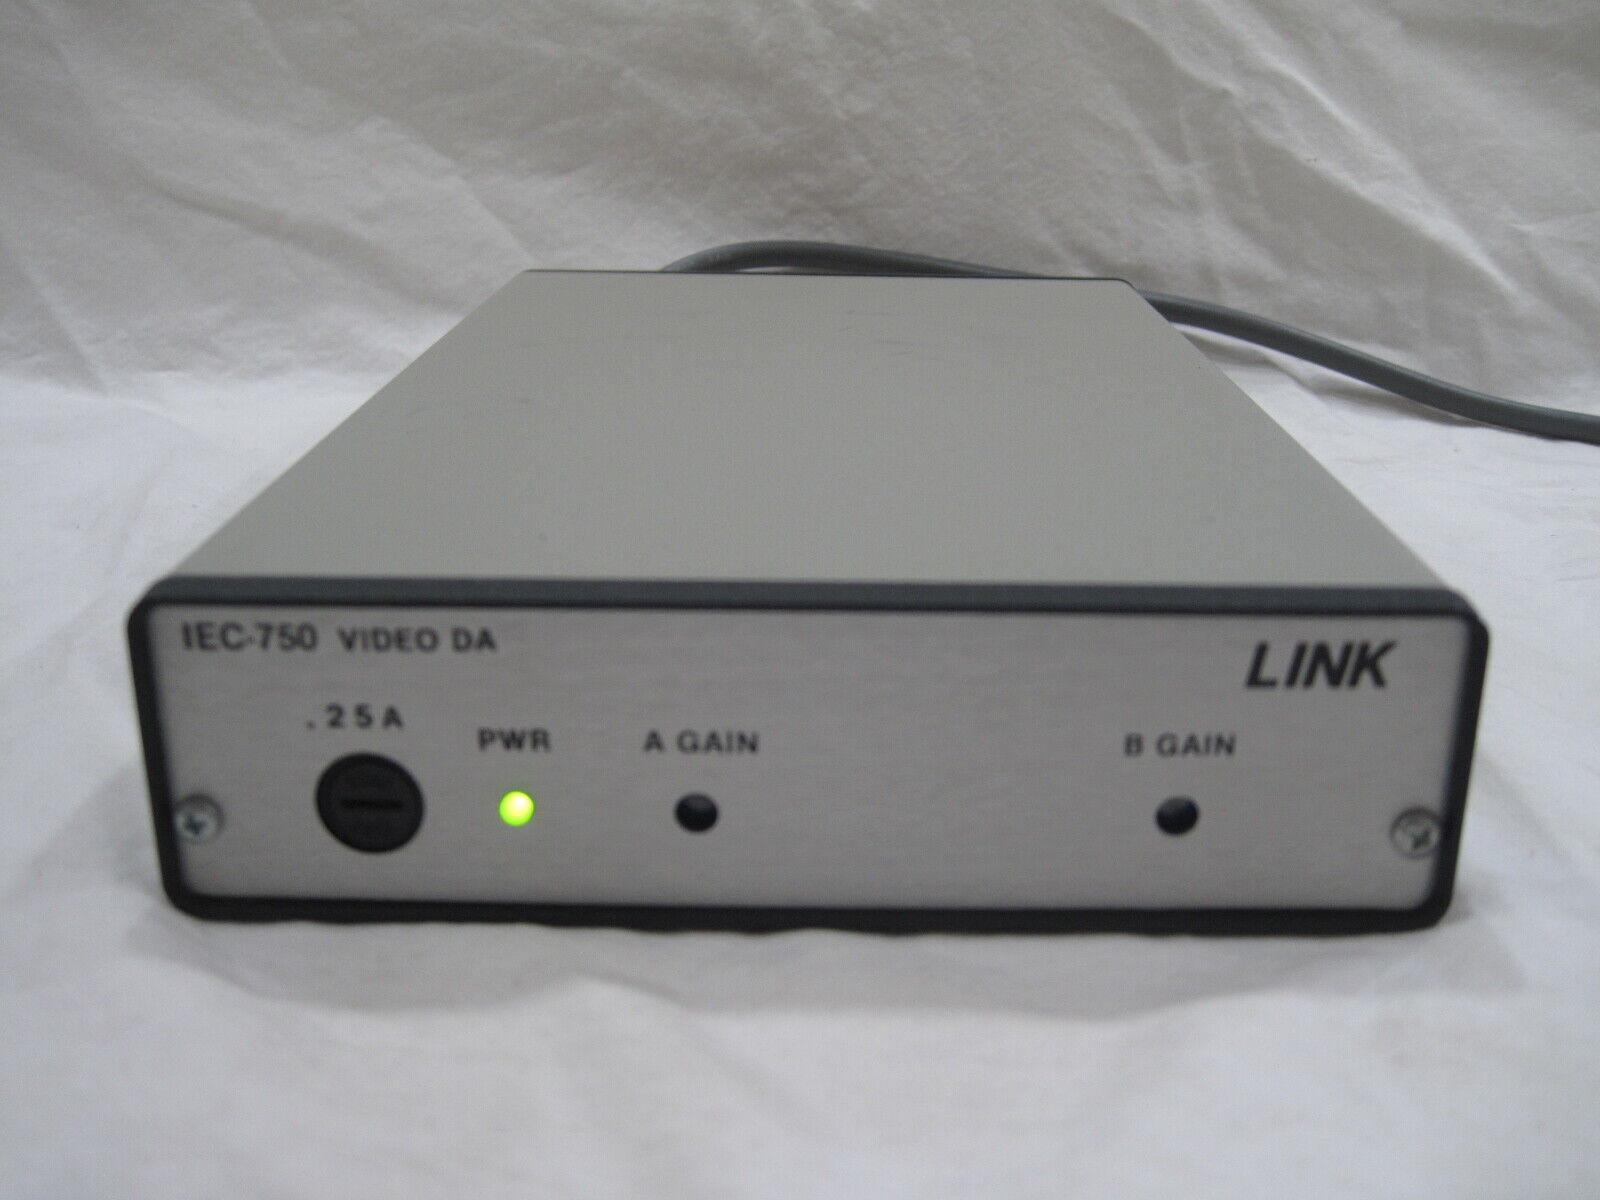 Link Iec-750 Video Distribution Amplifier